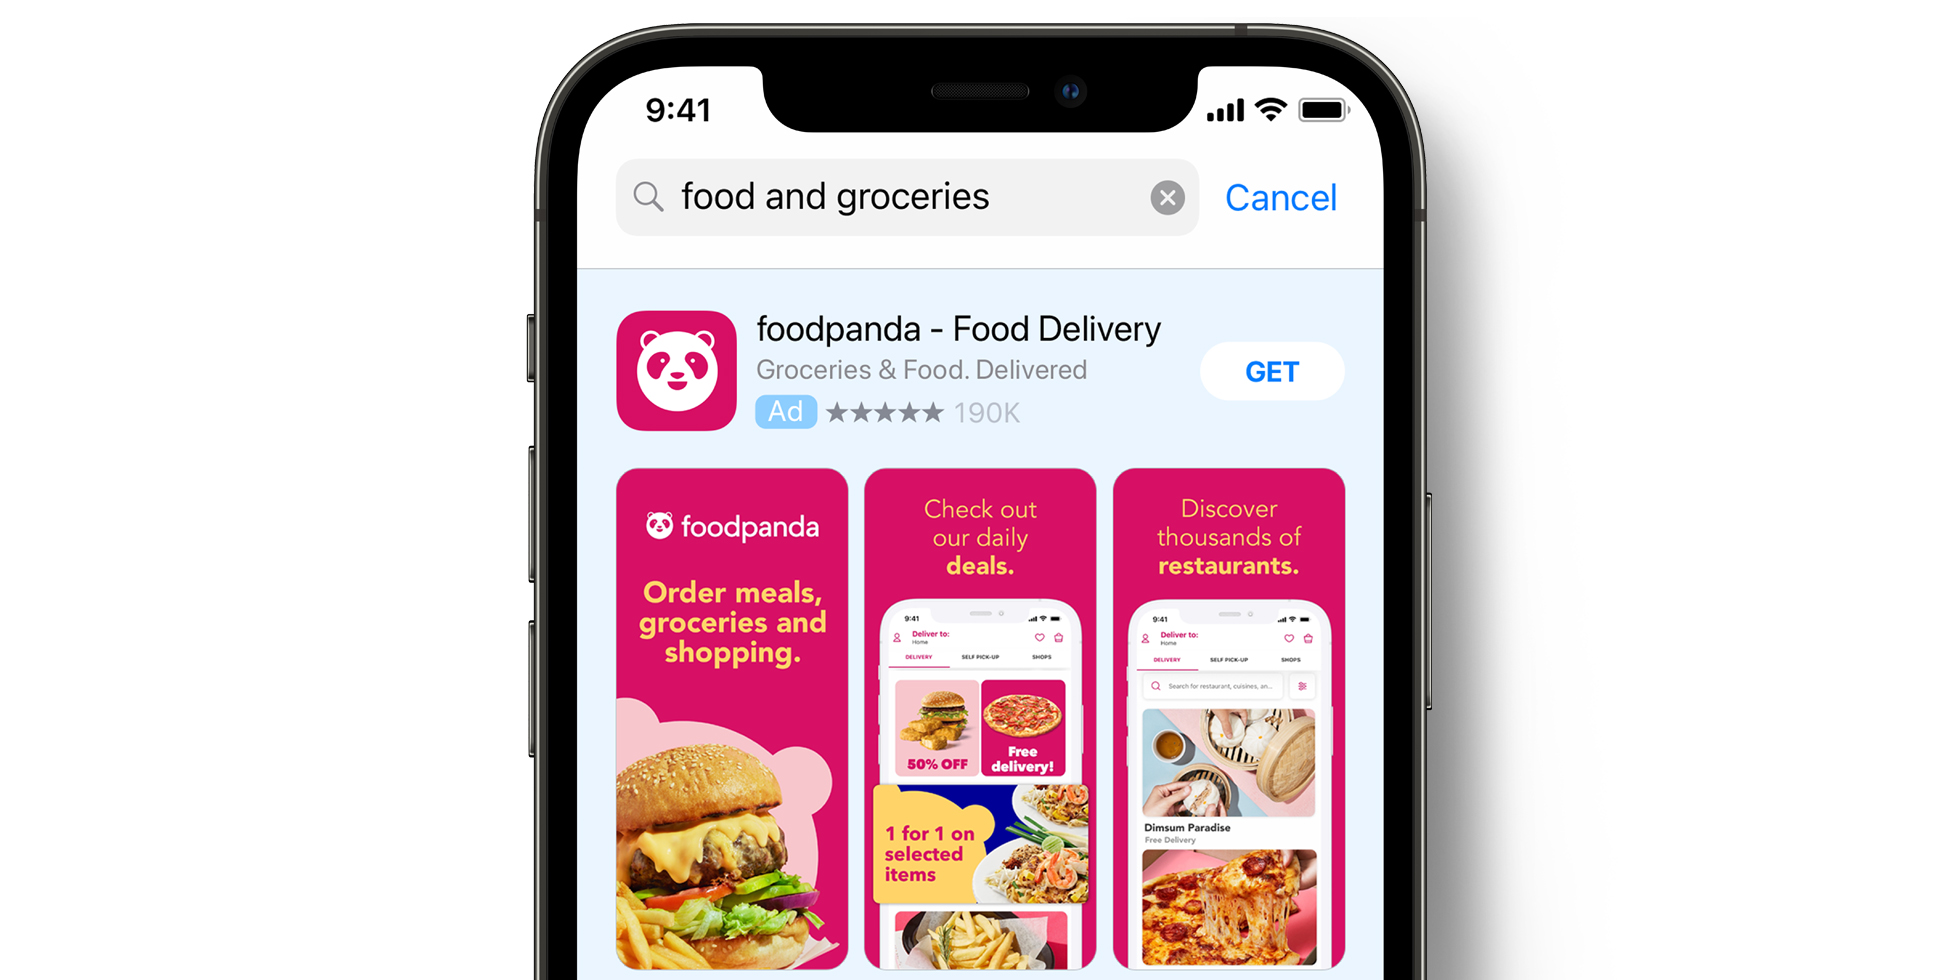 foodpanda ad on the App Store 